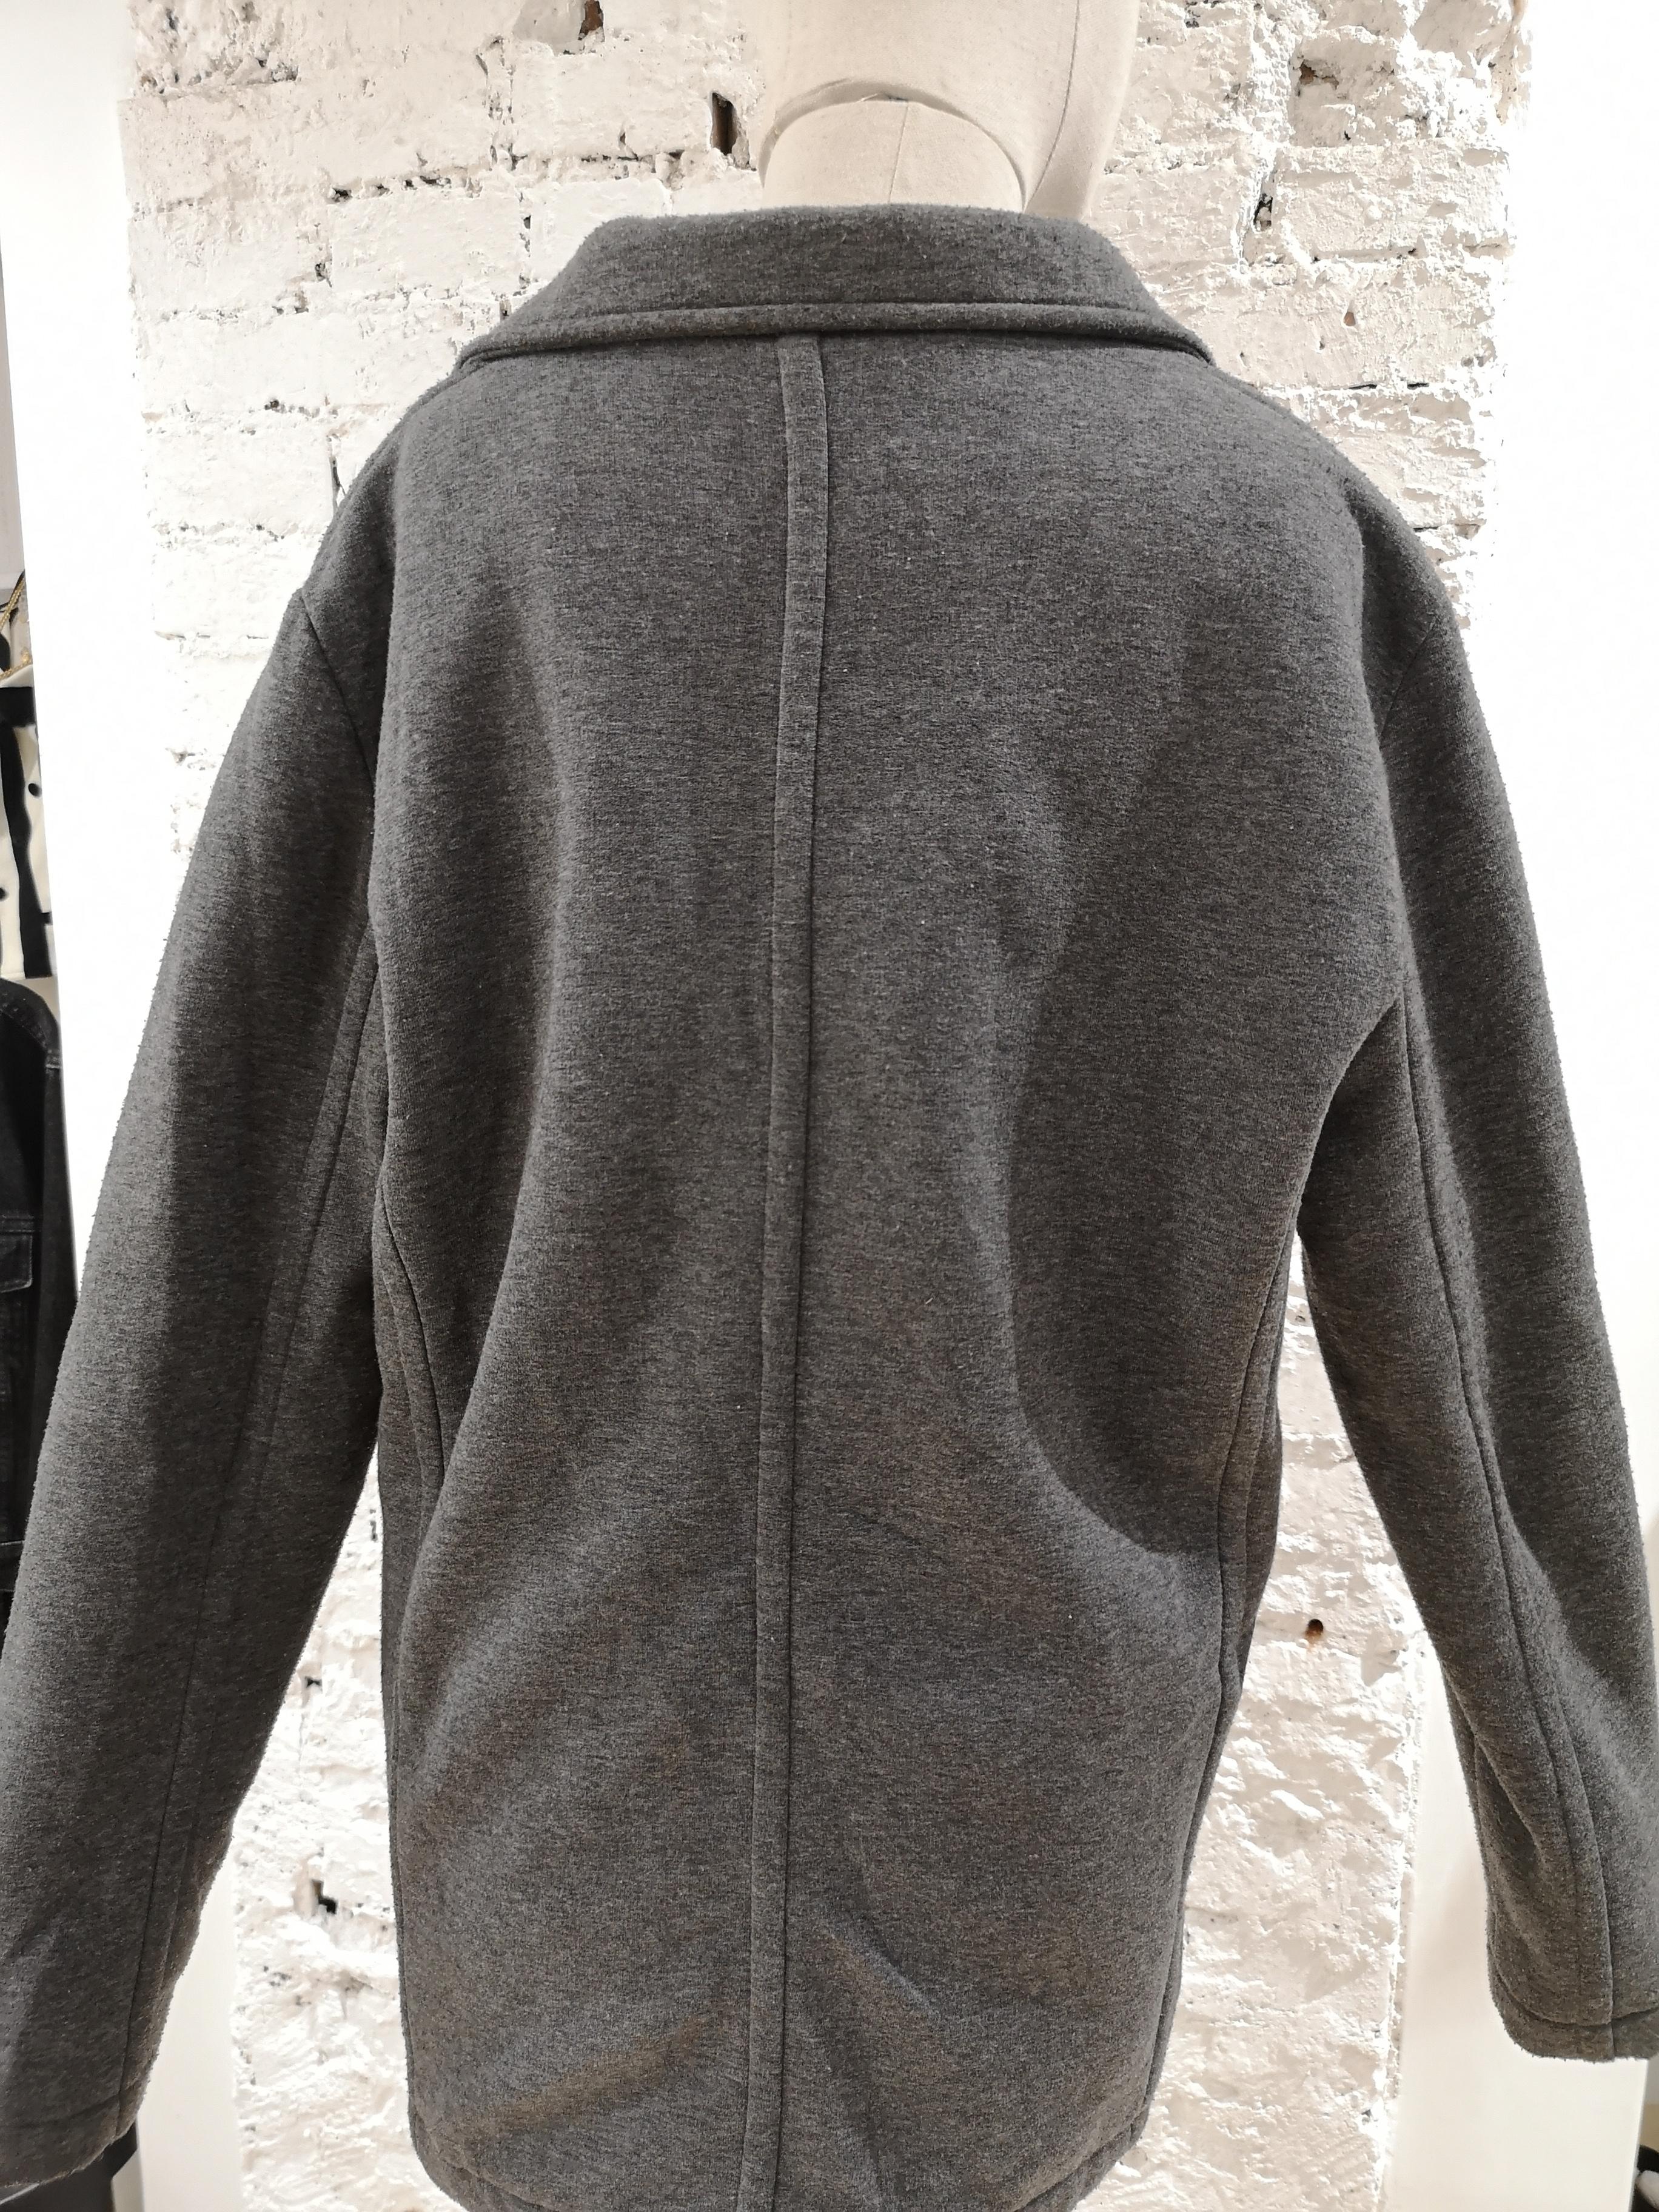 Original Vintage Style grey wool jacket
Size XXL